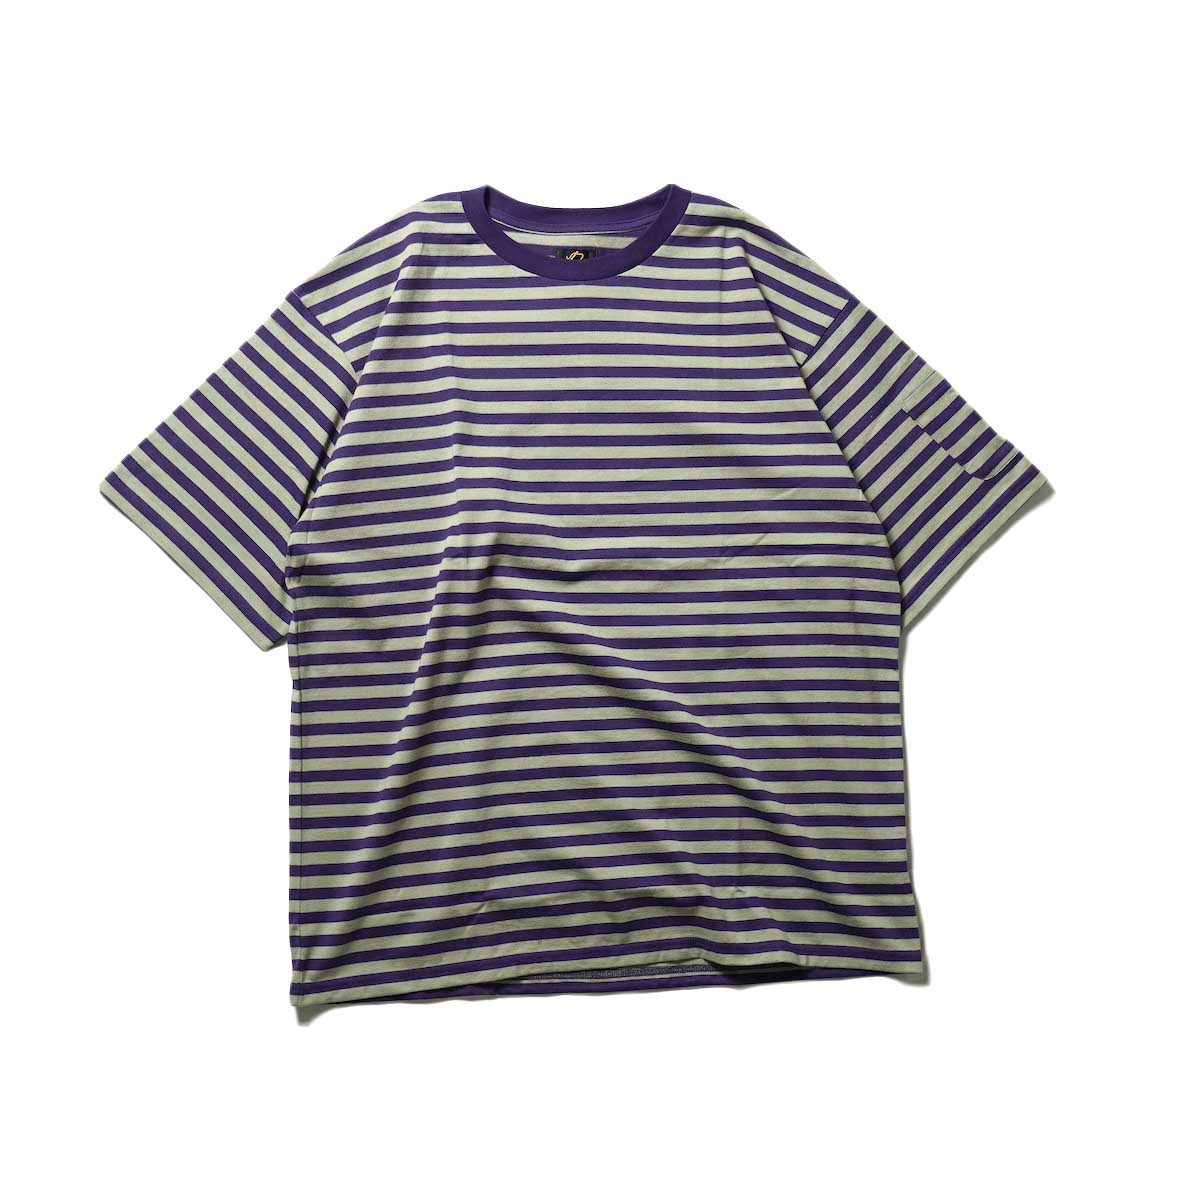 Needles / S/S Crew Neck Tee - Cotton Stripe Jersey (Purple)